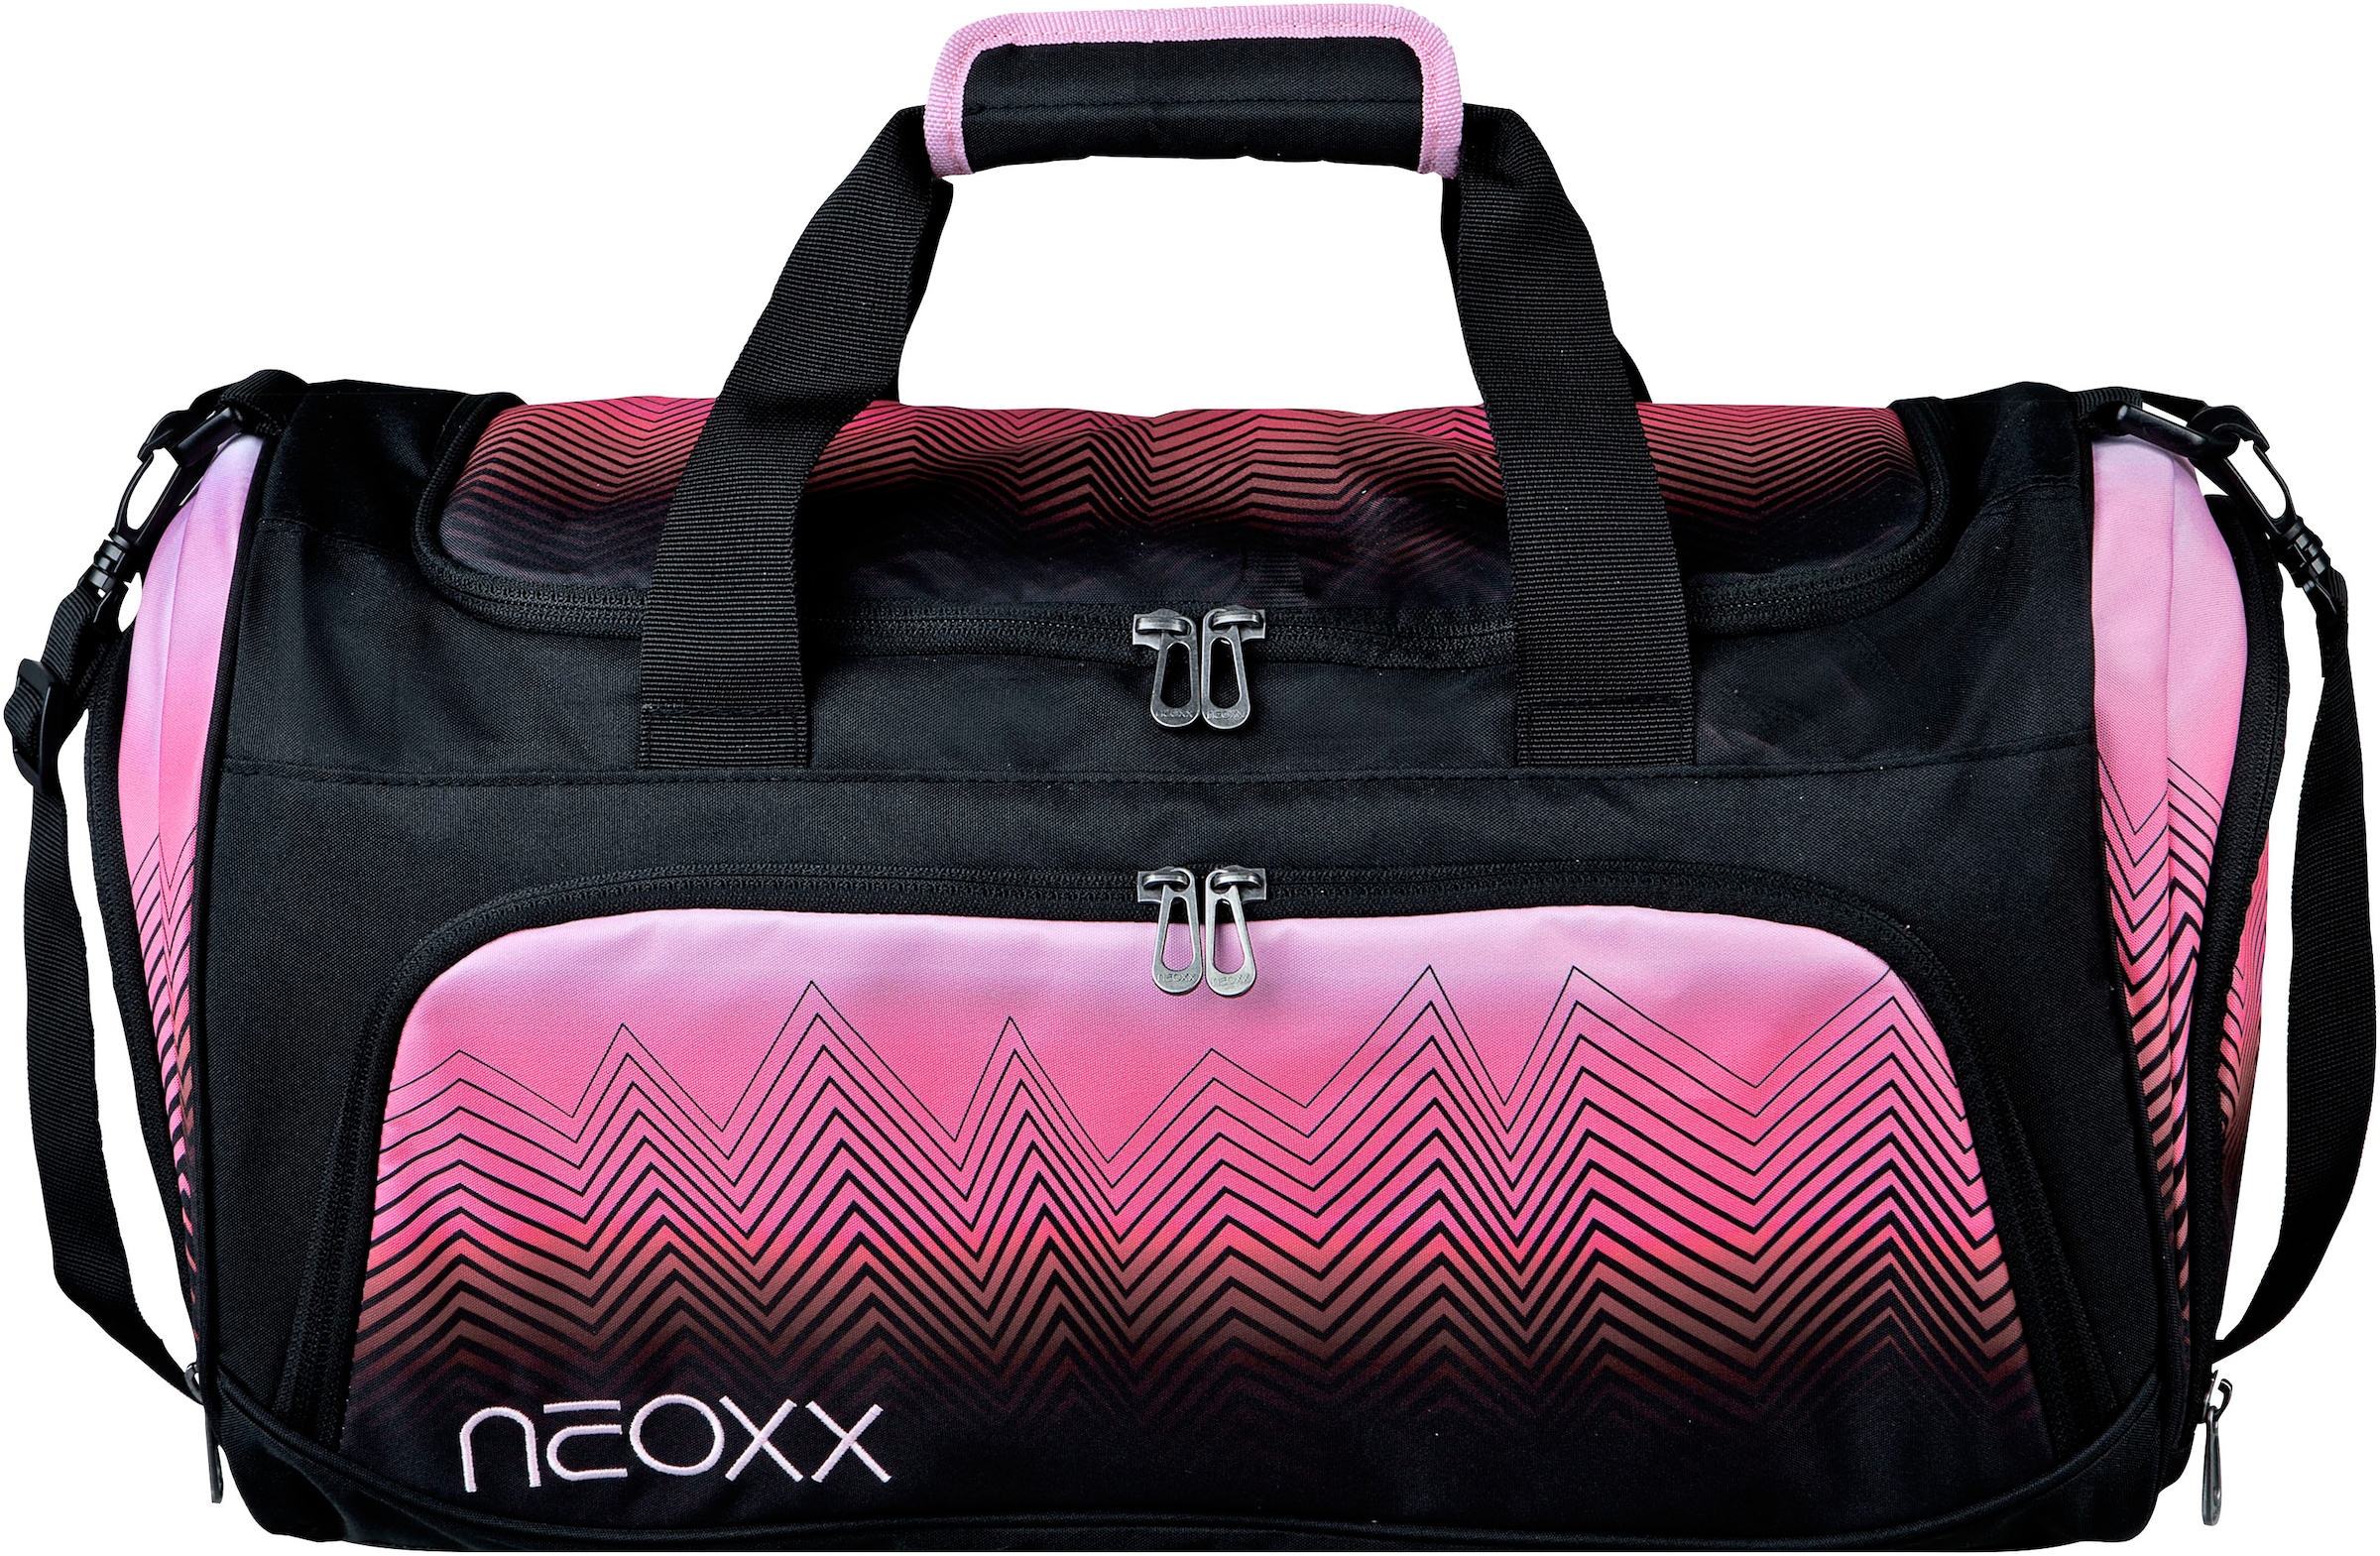 neoxx Sporttasche »Move, Sweet like Sunset«, teilweise aus recyceltem Material